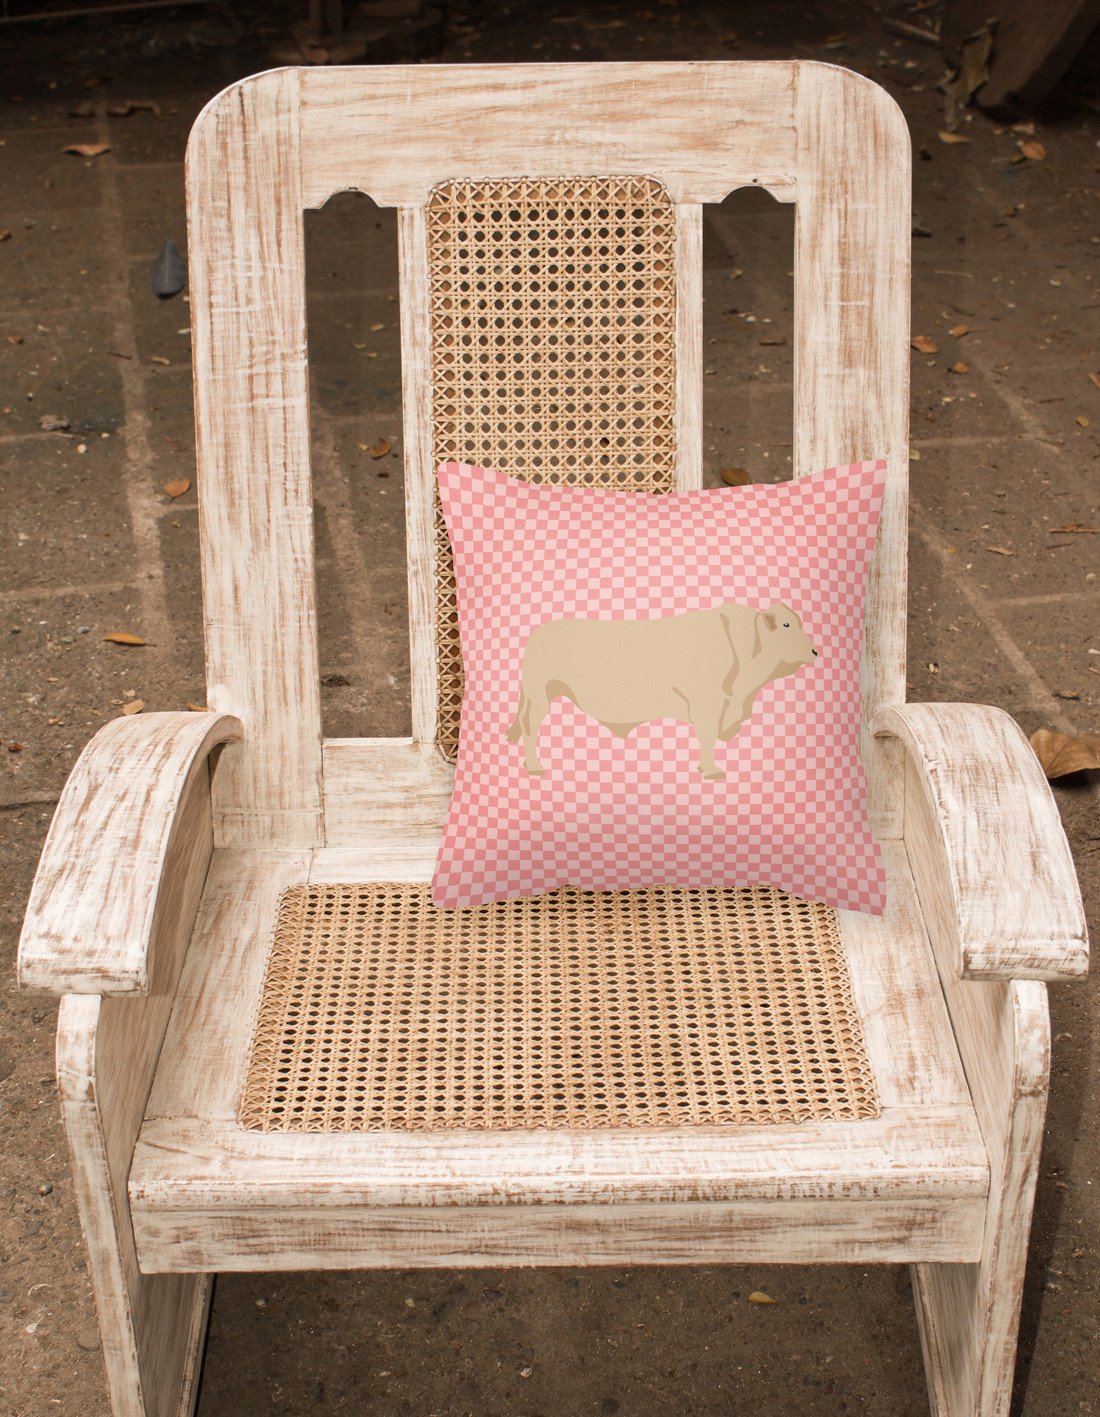 Charolais Cow Pink Check Fabric Decorative Pillow BB7826PW1818 by Caroline's Treasures